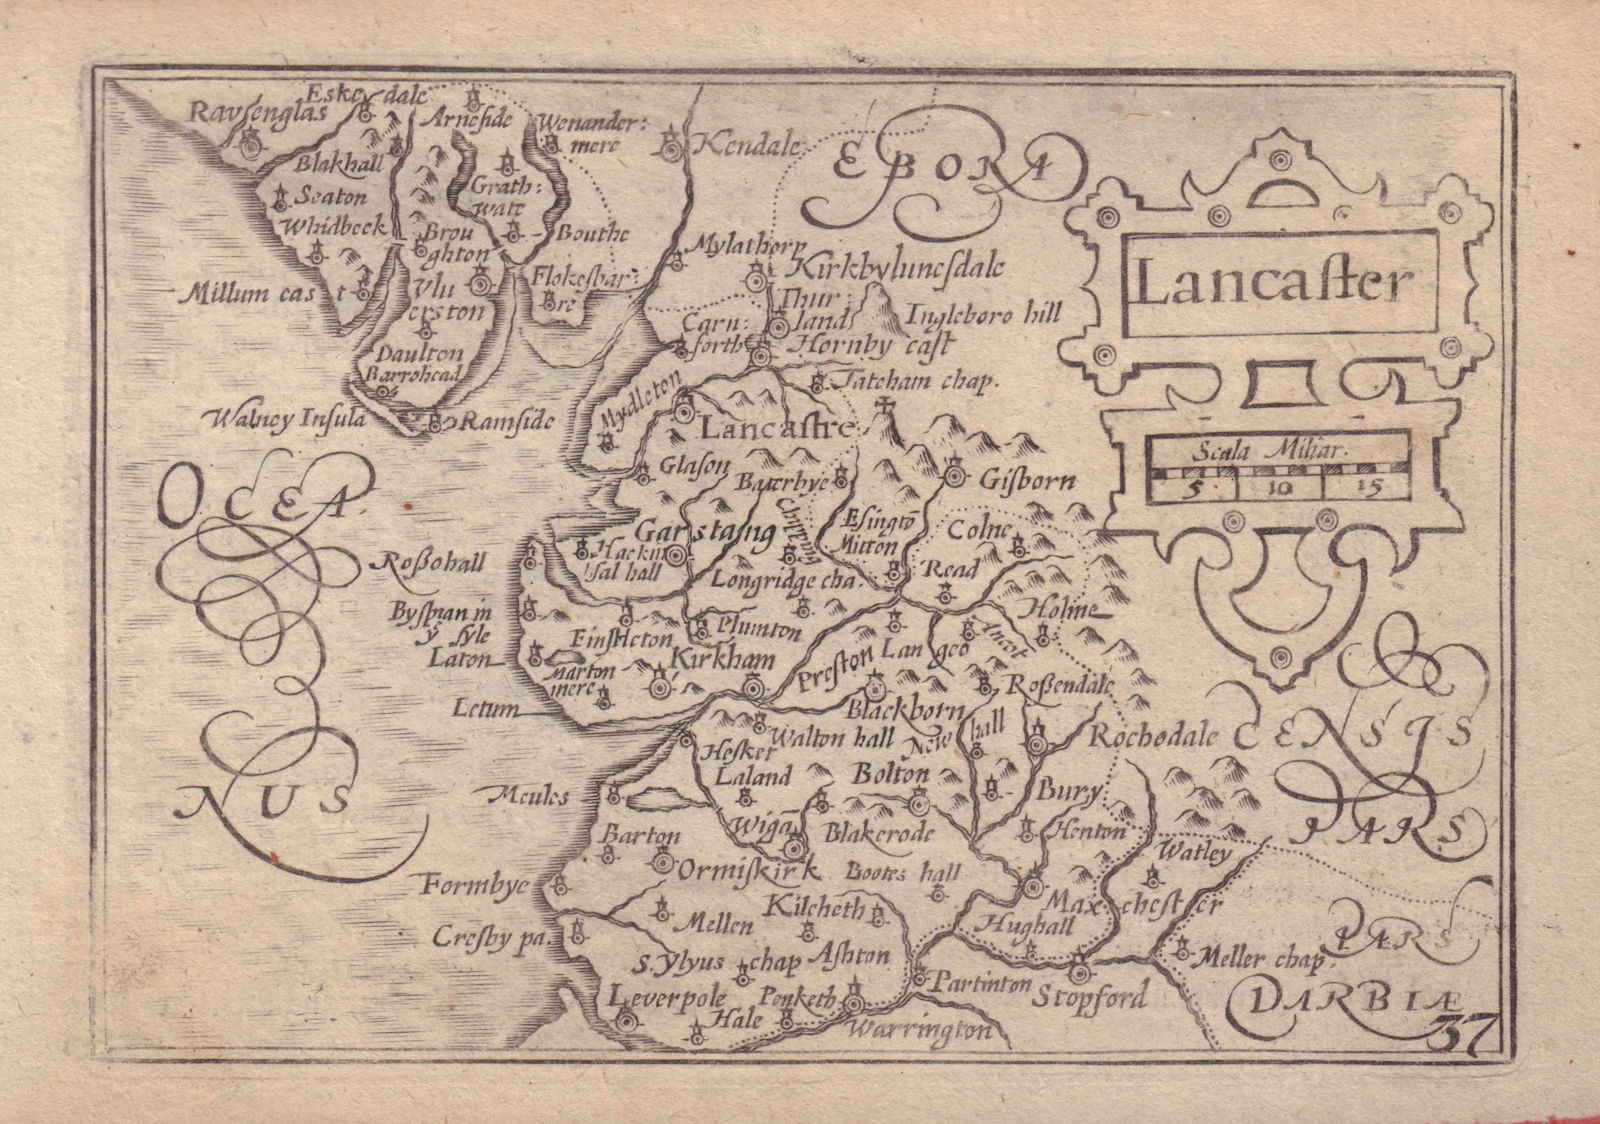 Lancaster by van den Keere. "Speed miniature" Lancashire county map 1632